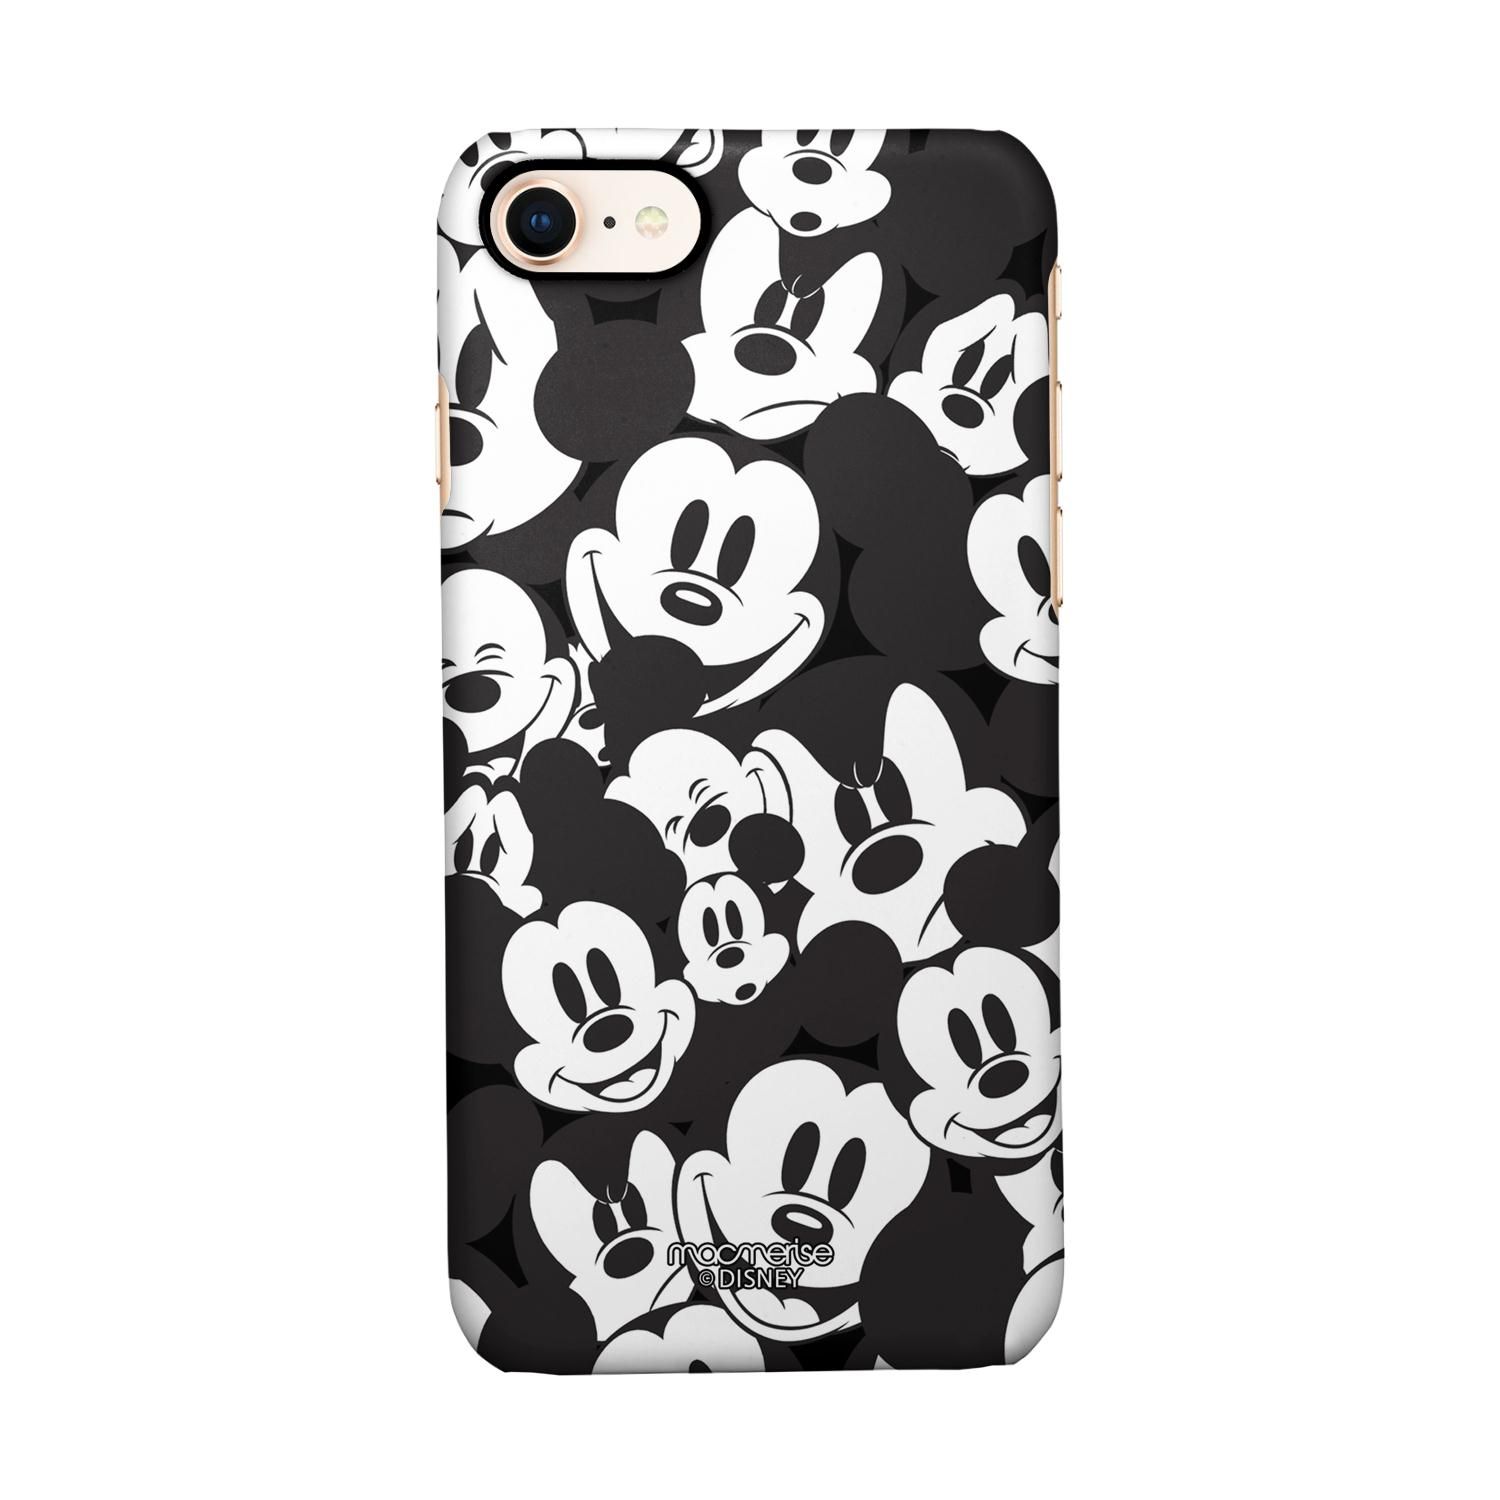 Buy Mickey Smileys - Sleek Phone Case for iPhone 8 Online